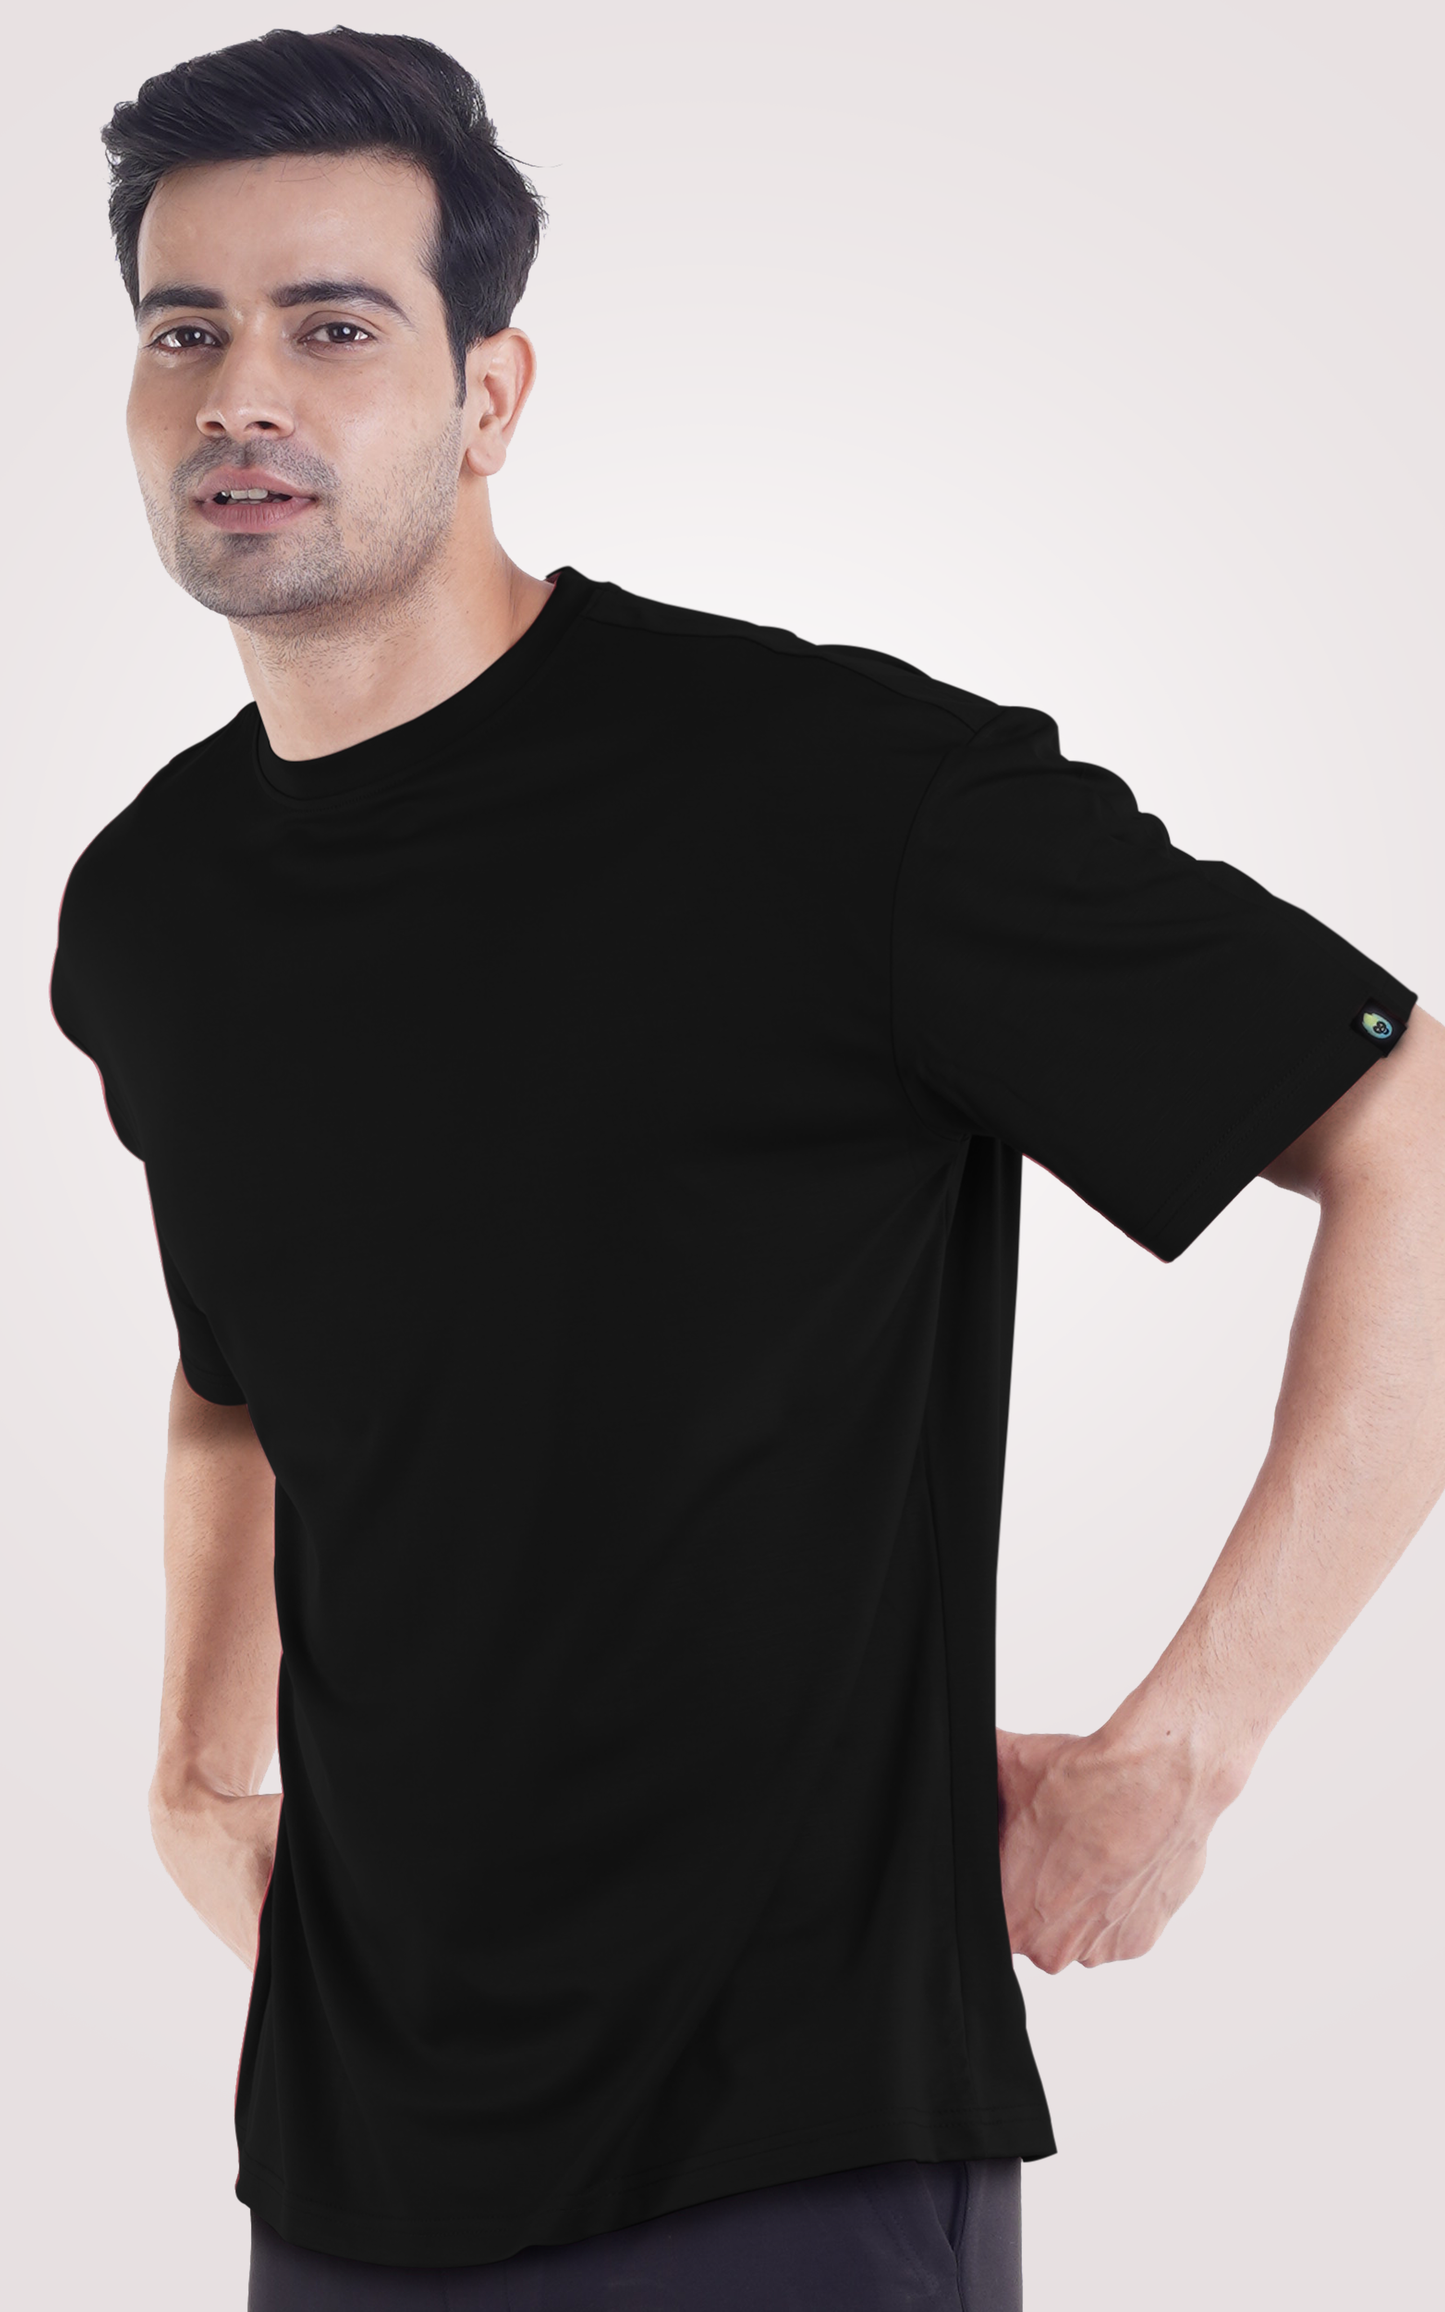 Plain Black Over Size T-Shirt